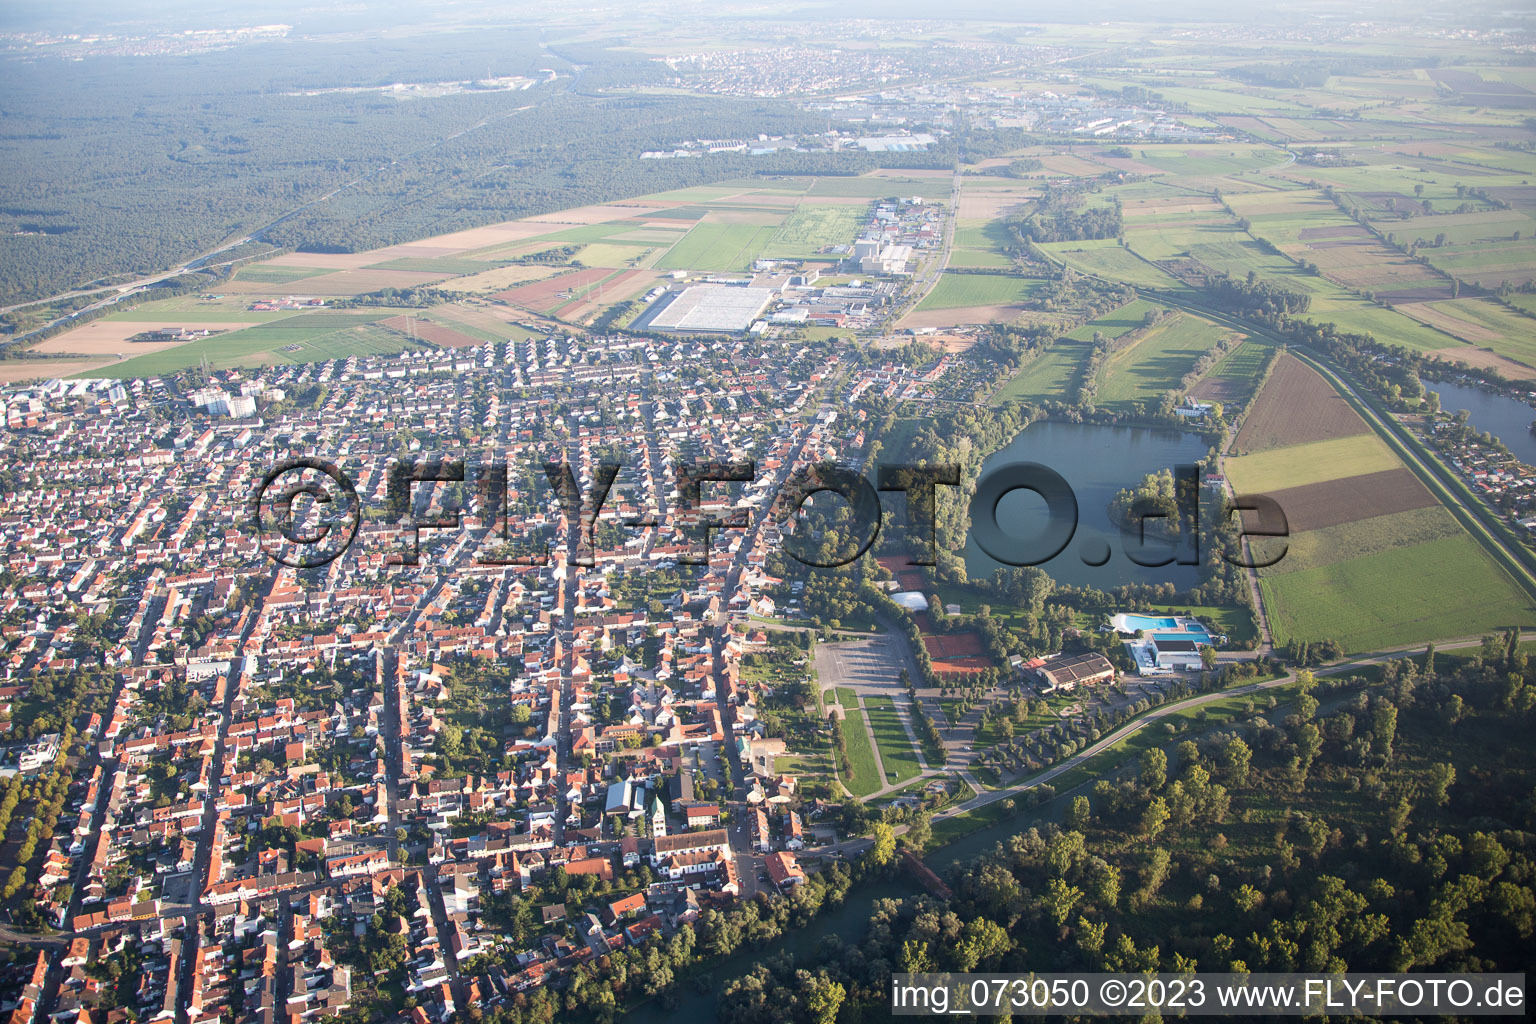 Ketsch dans le département Bade-Wurtemberg, Allemagne vue du ciel